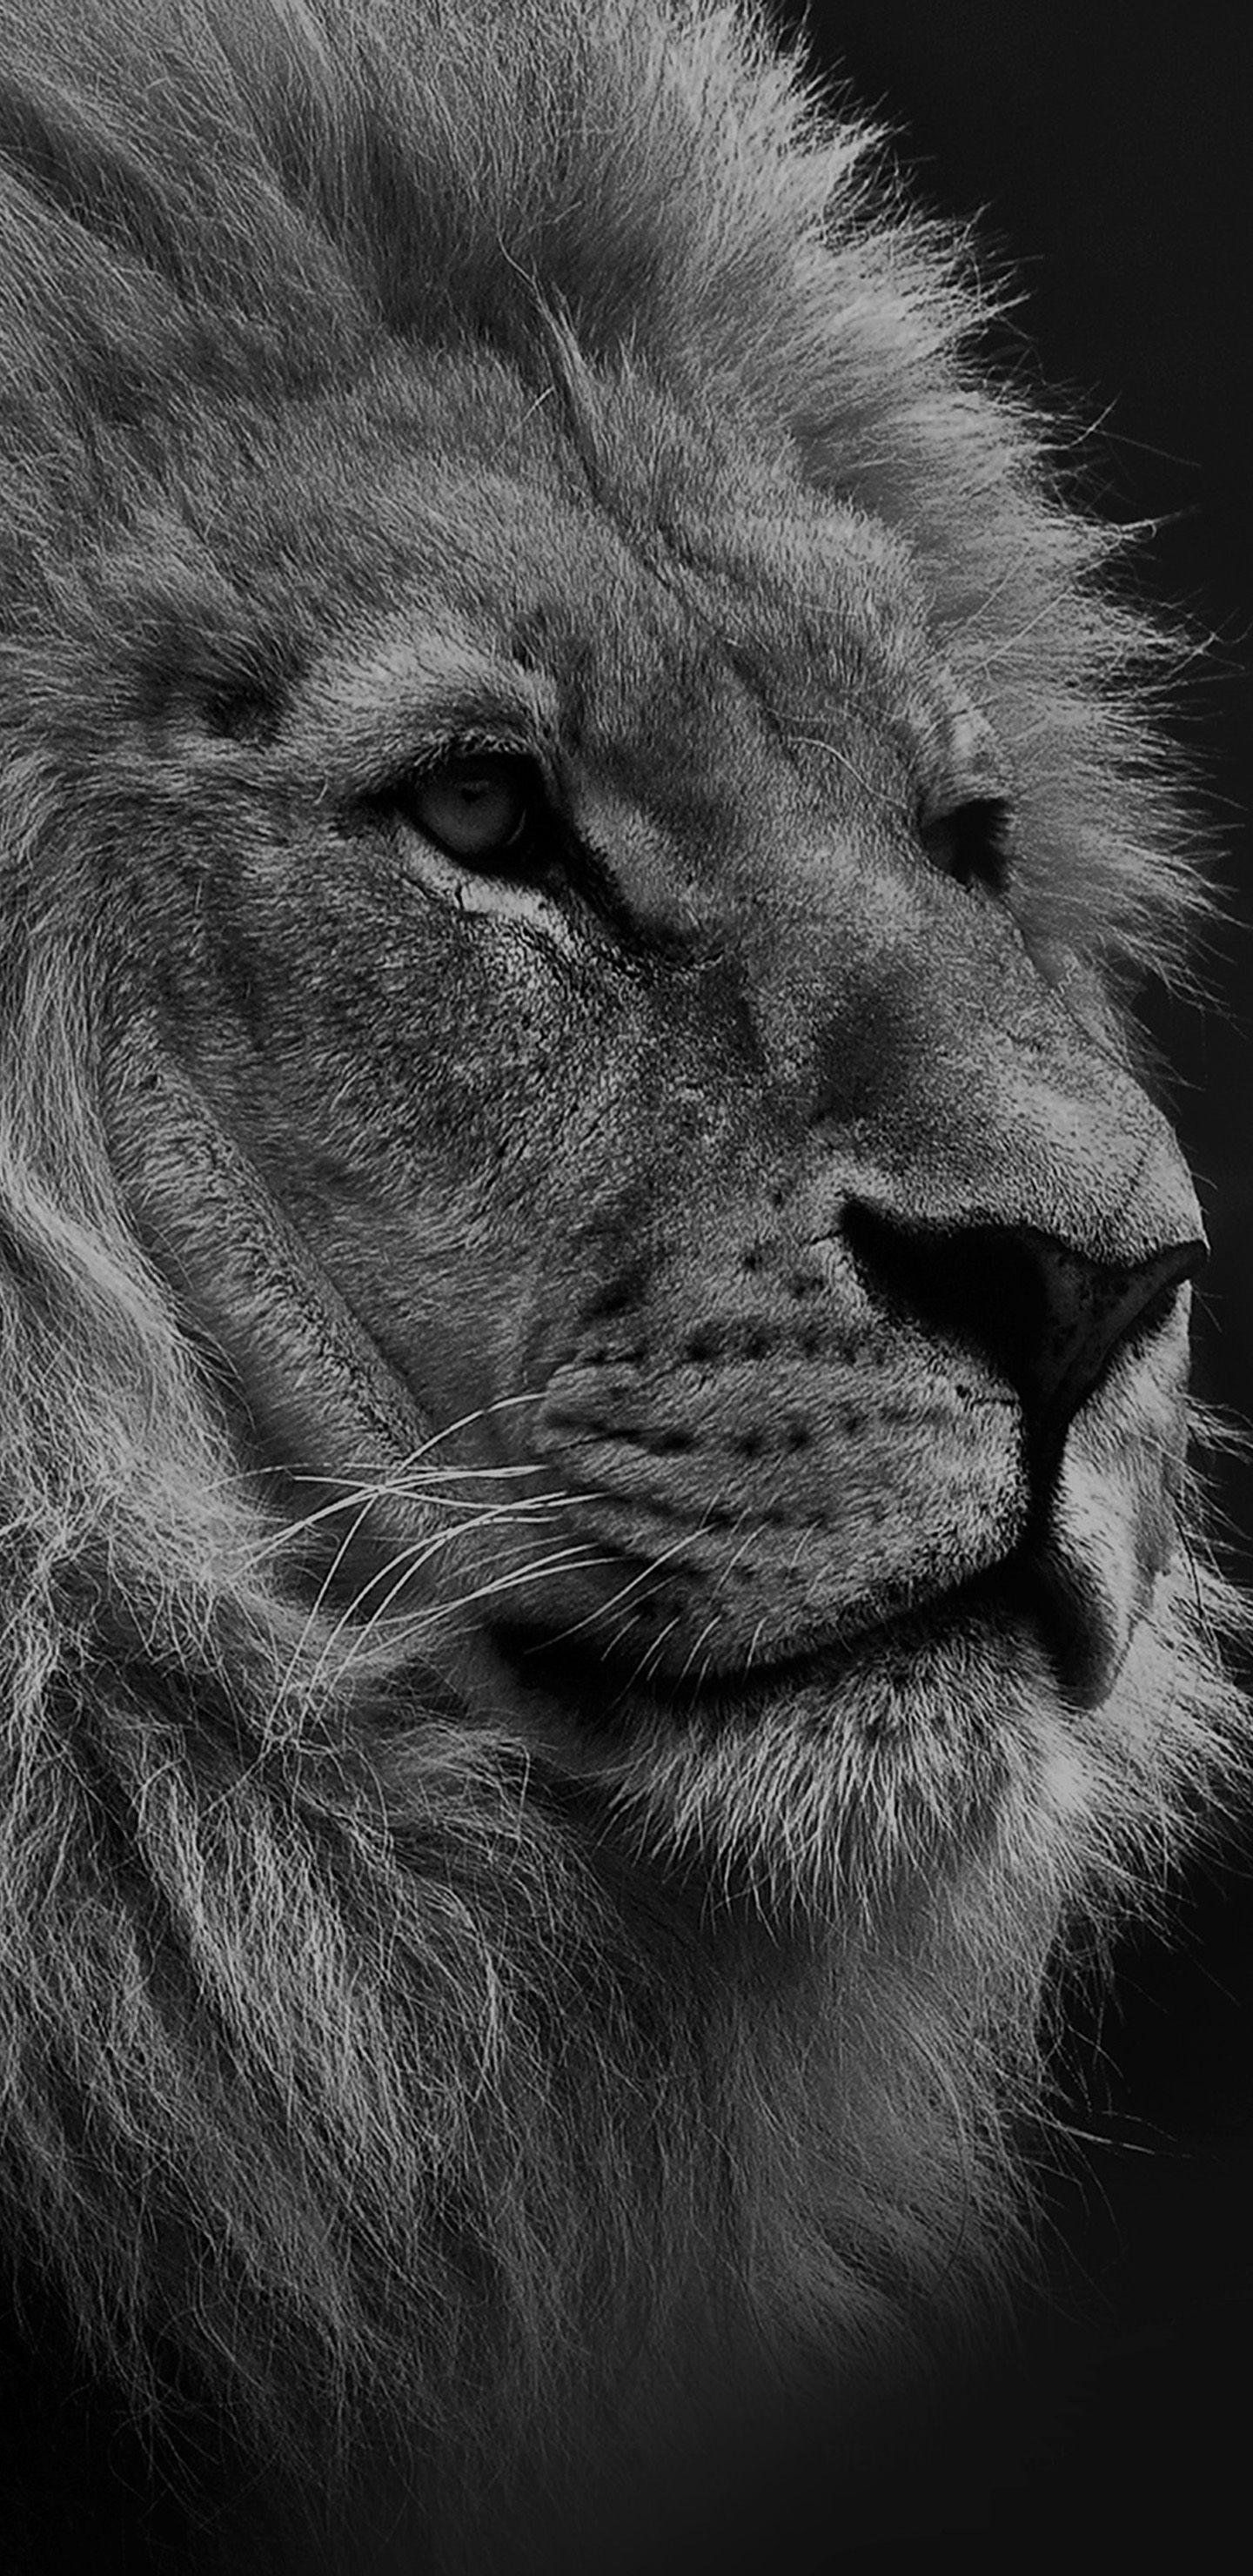 Lion king aesthetic Wallpaper Download